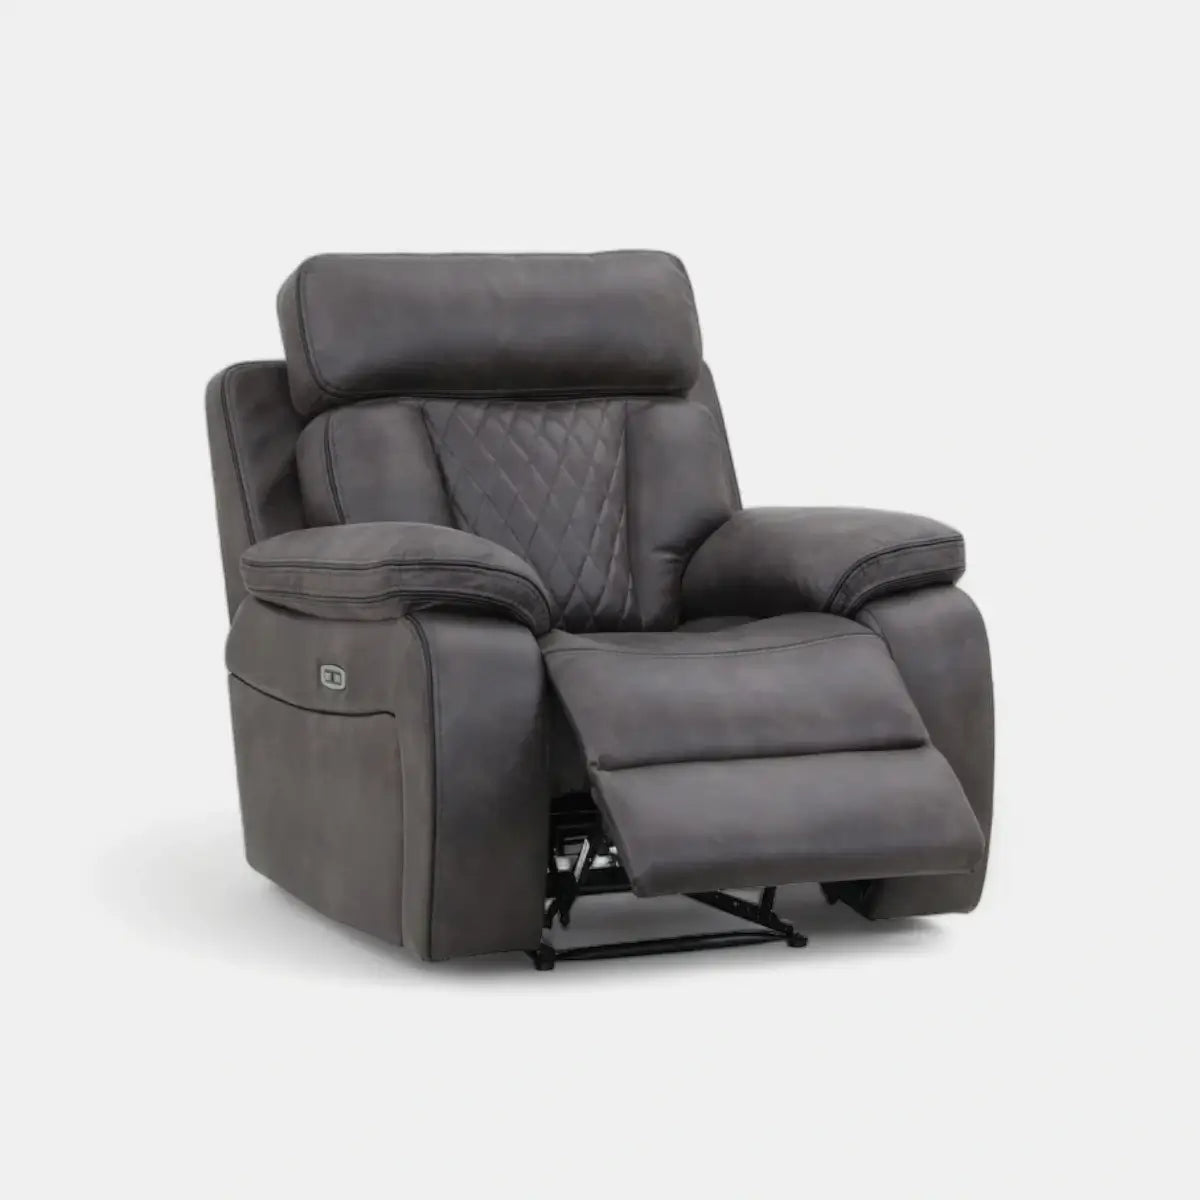 Kobe Power Recliner Armchair with USB Charging - Elegant Design & Supreme Comfort